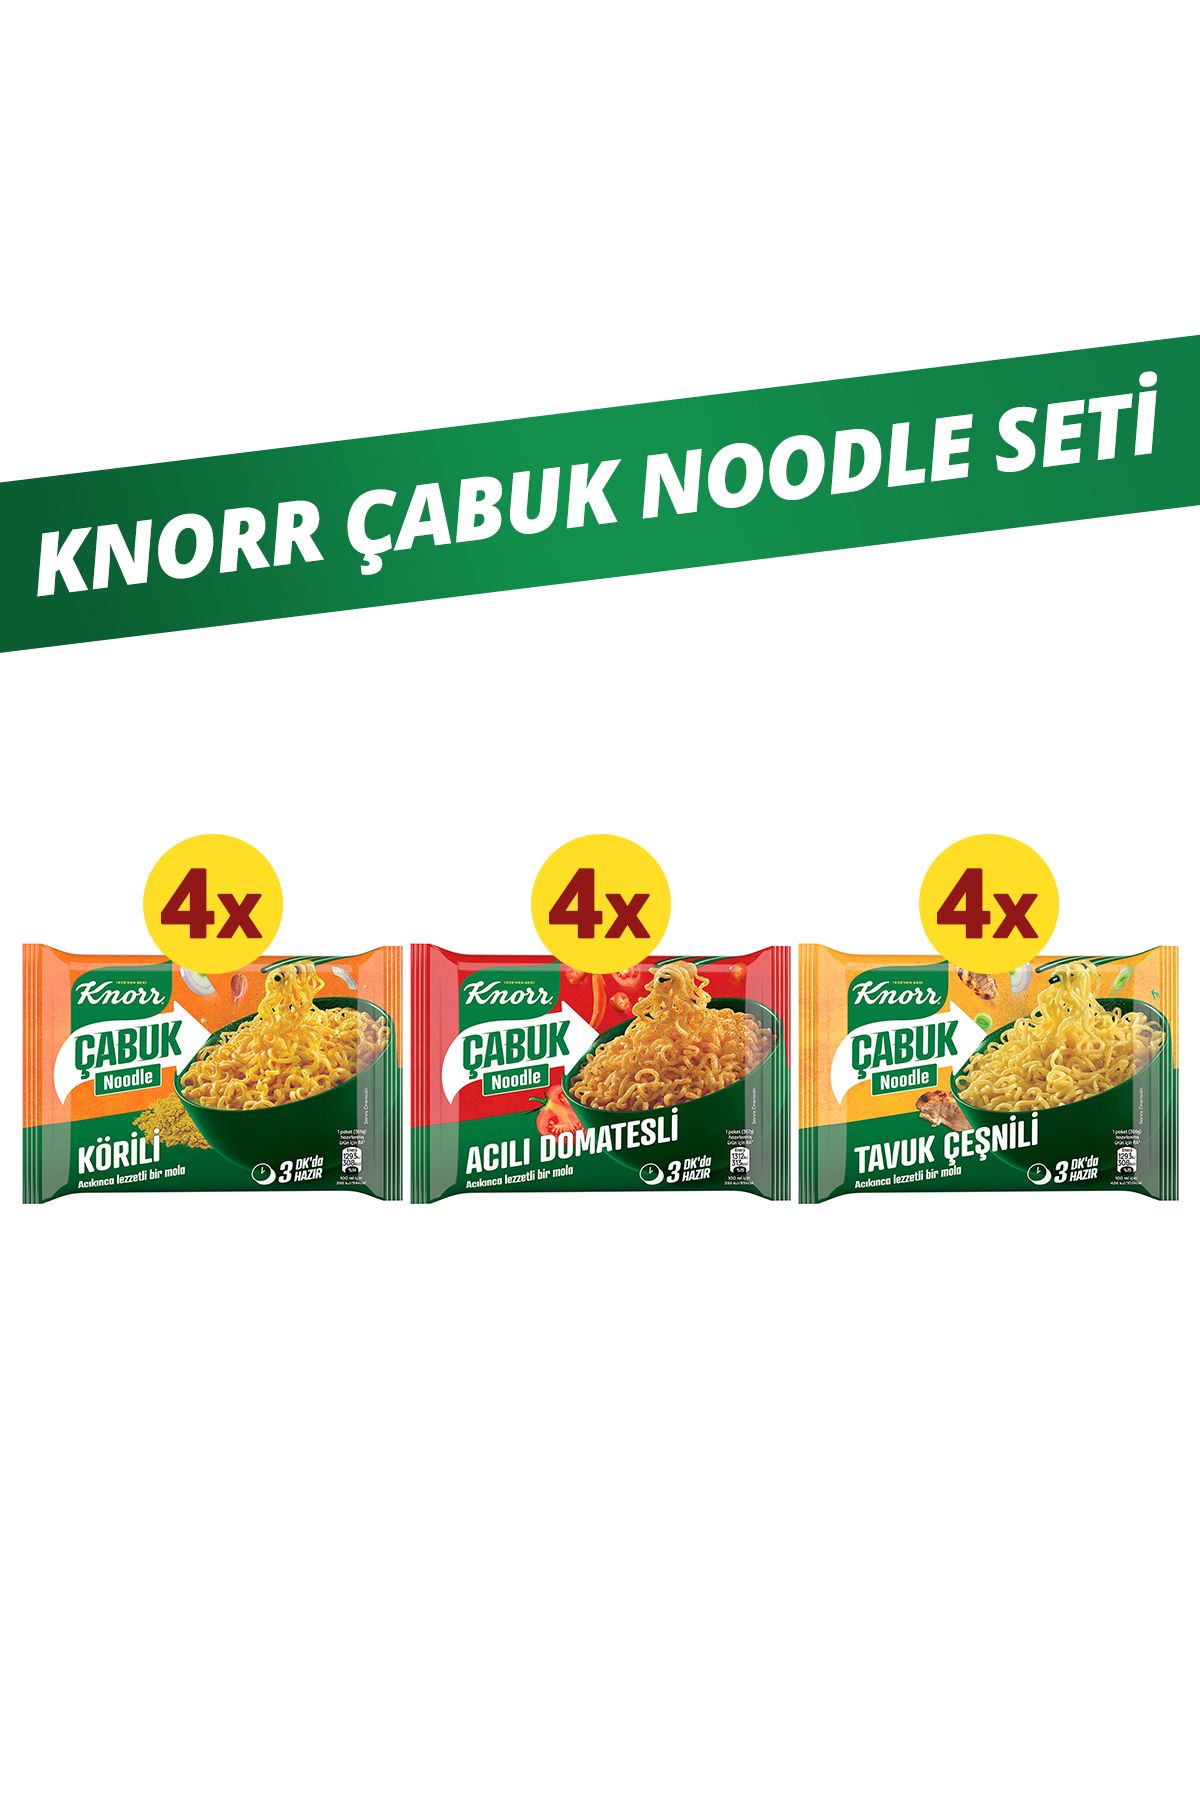 Knorr Çabuk Noodle Körili 66g X4 Tavuk Çeşnili 66g X4 Acılı Domatesli 67g X4